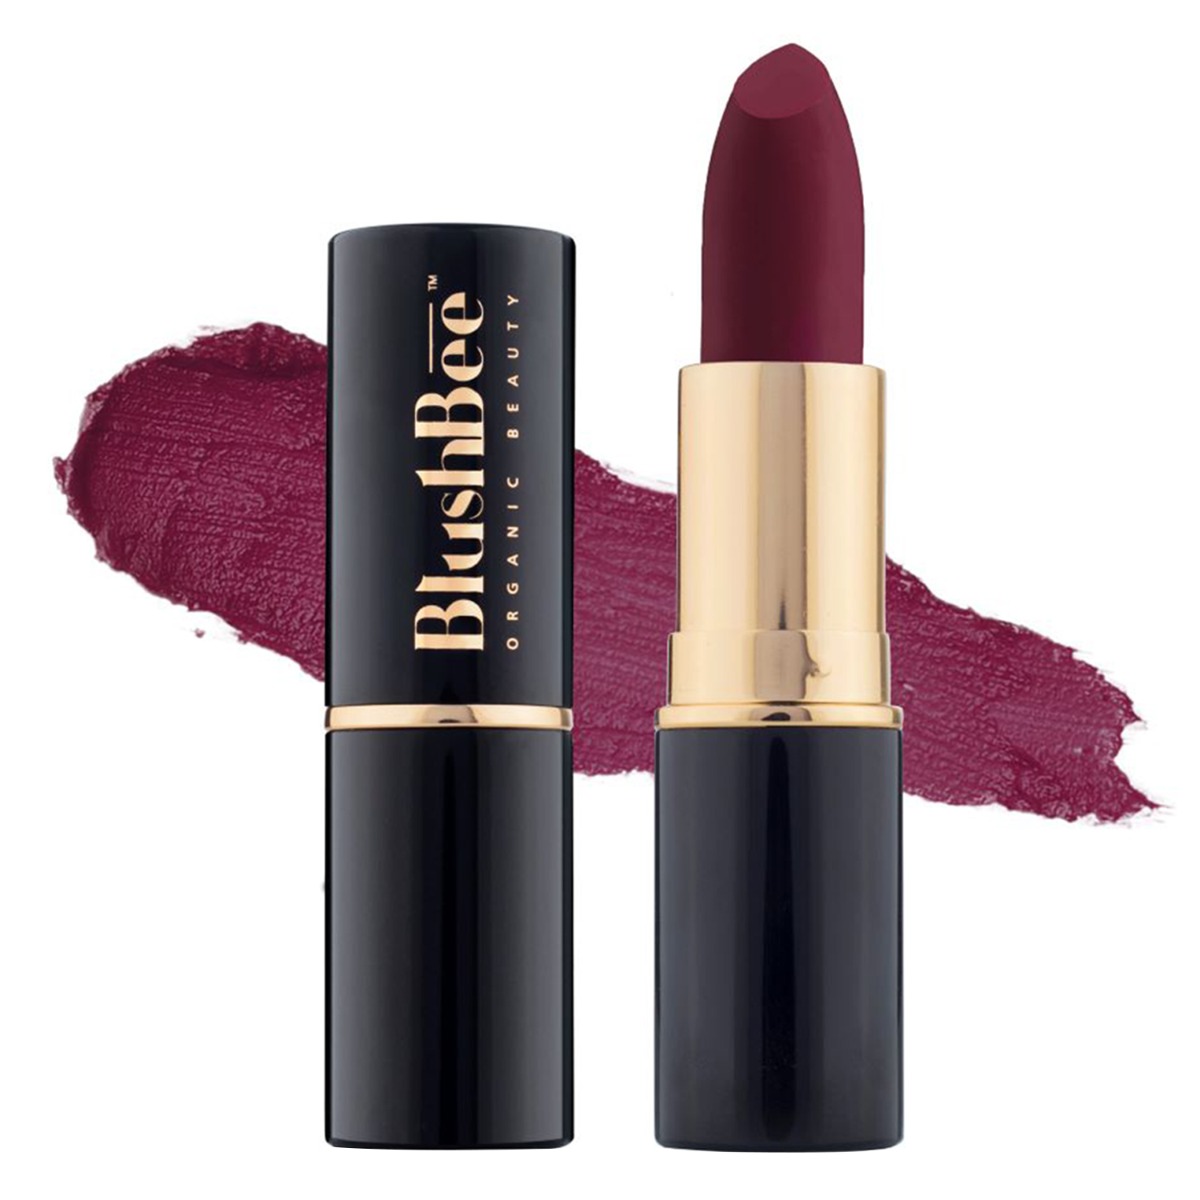 BlushBee Organic Beauty Lip Nourishing Organic Vegan Lipstick, 4.2gm-Wine Waltz